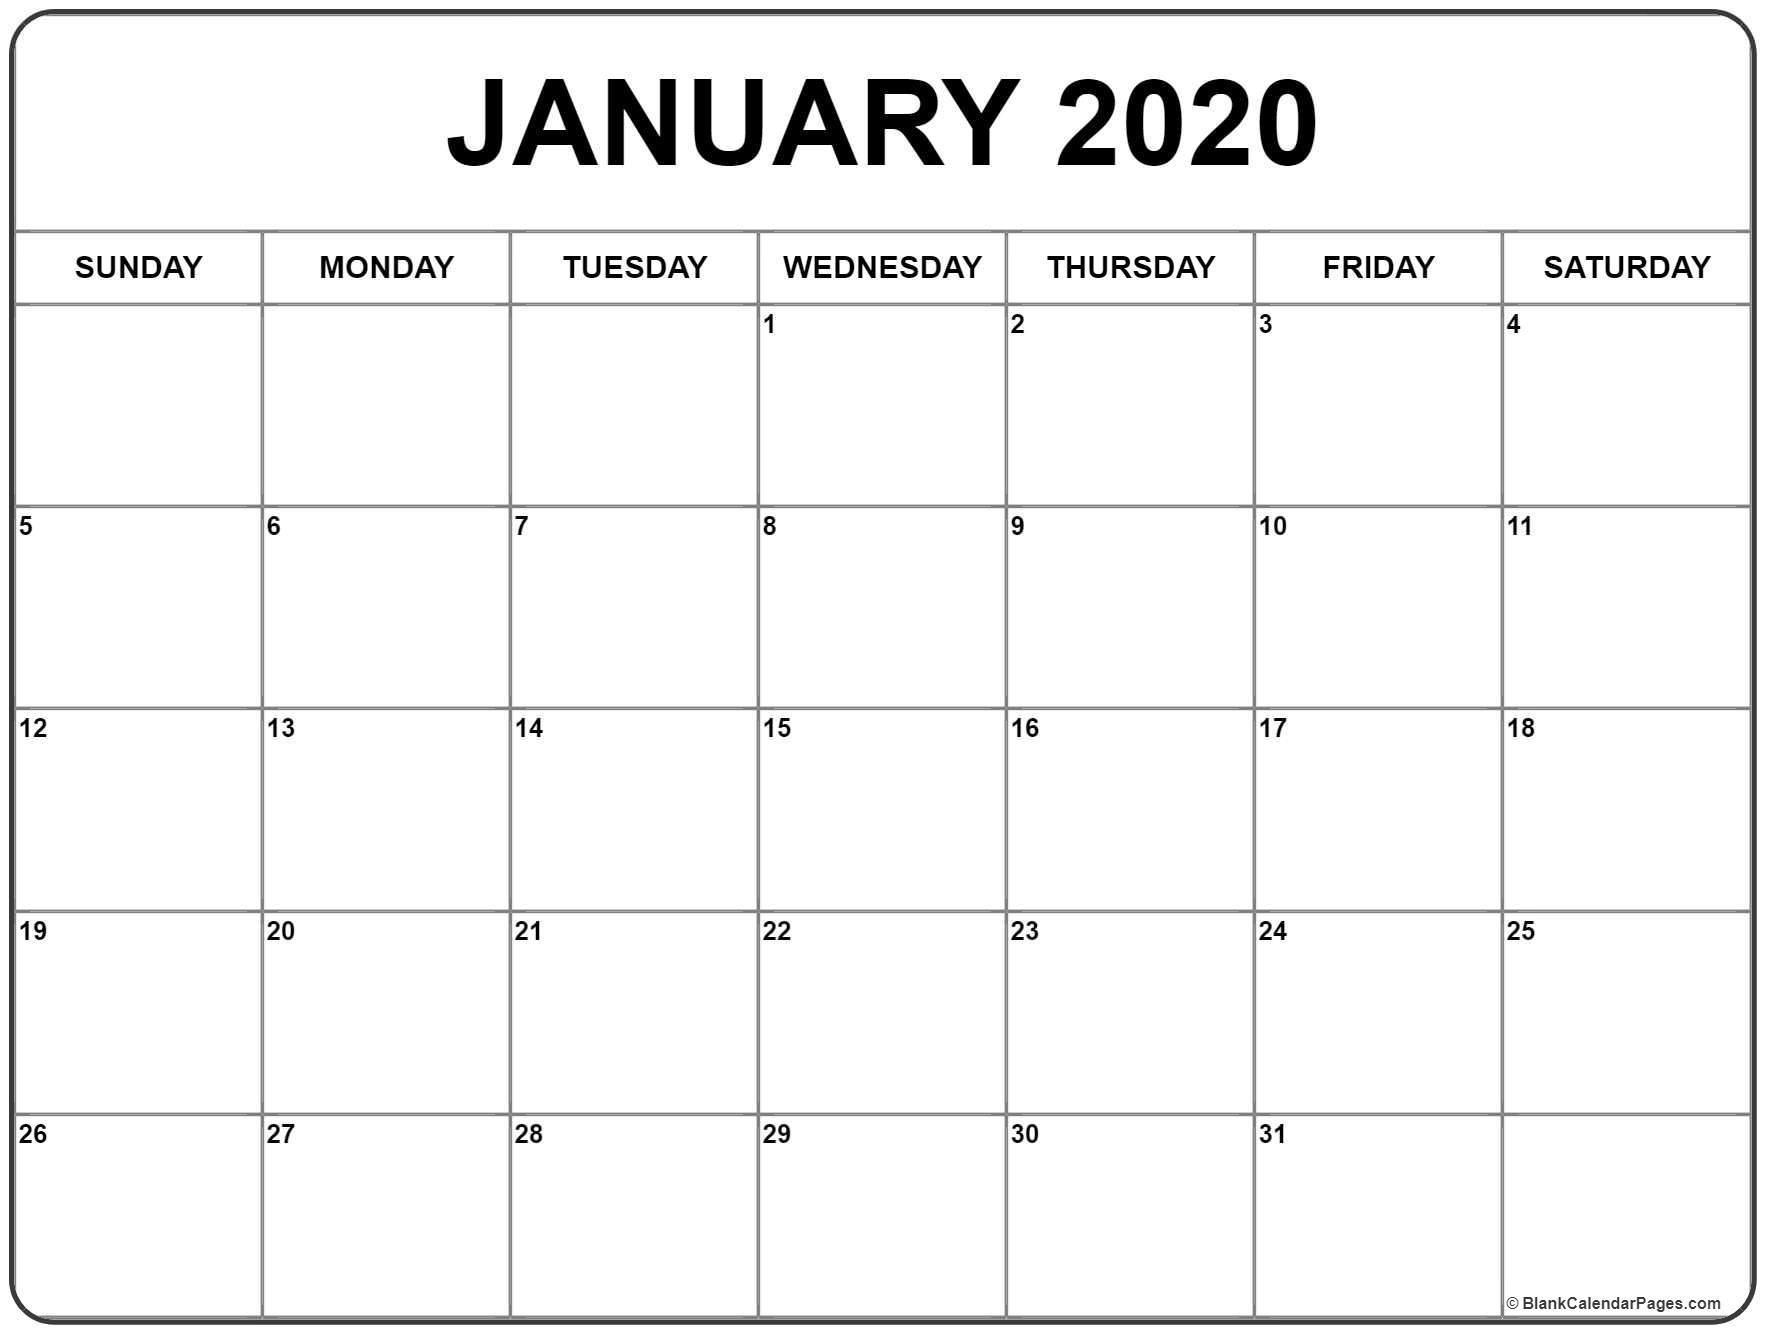 CAL=January 2020 calendar